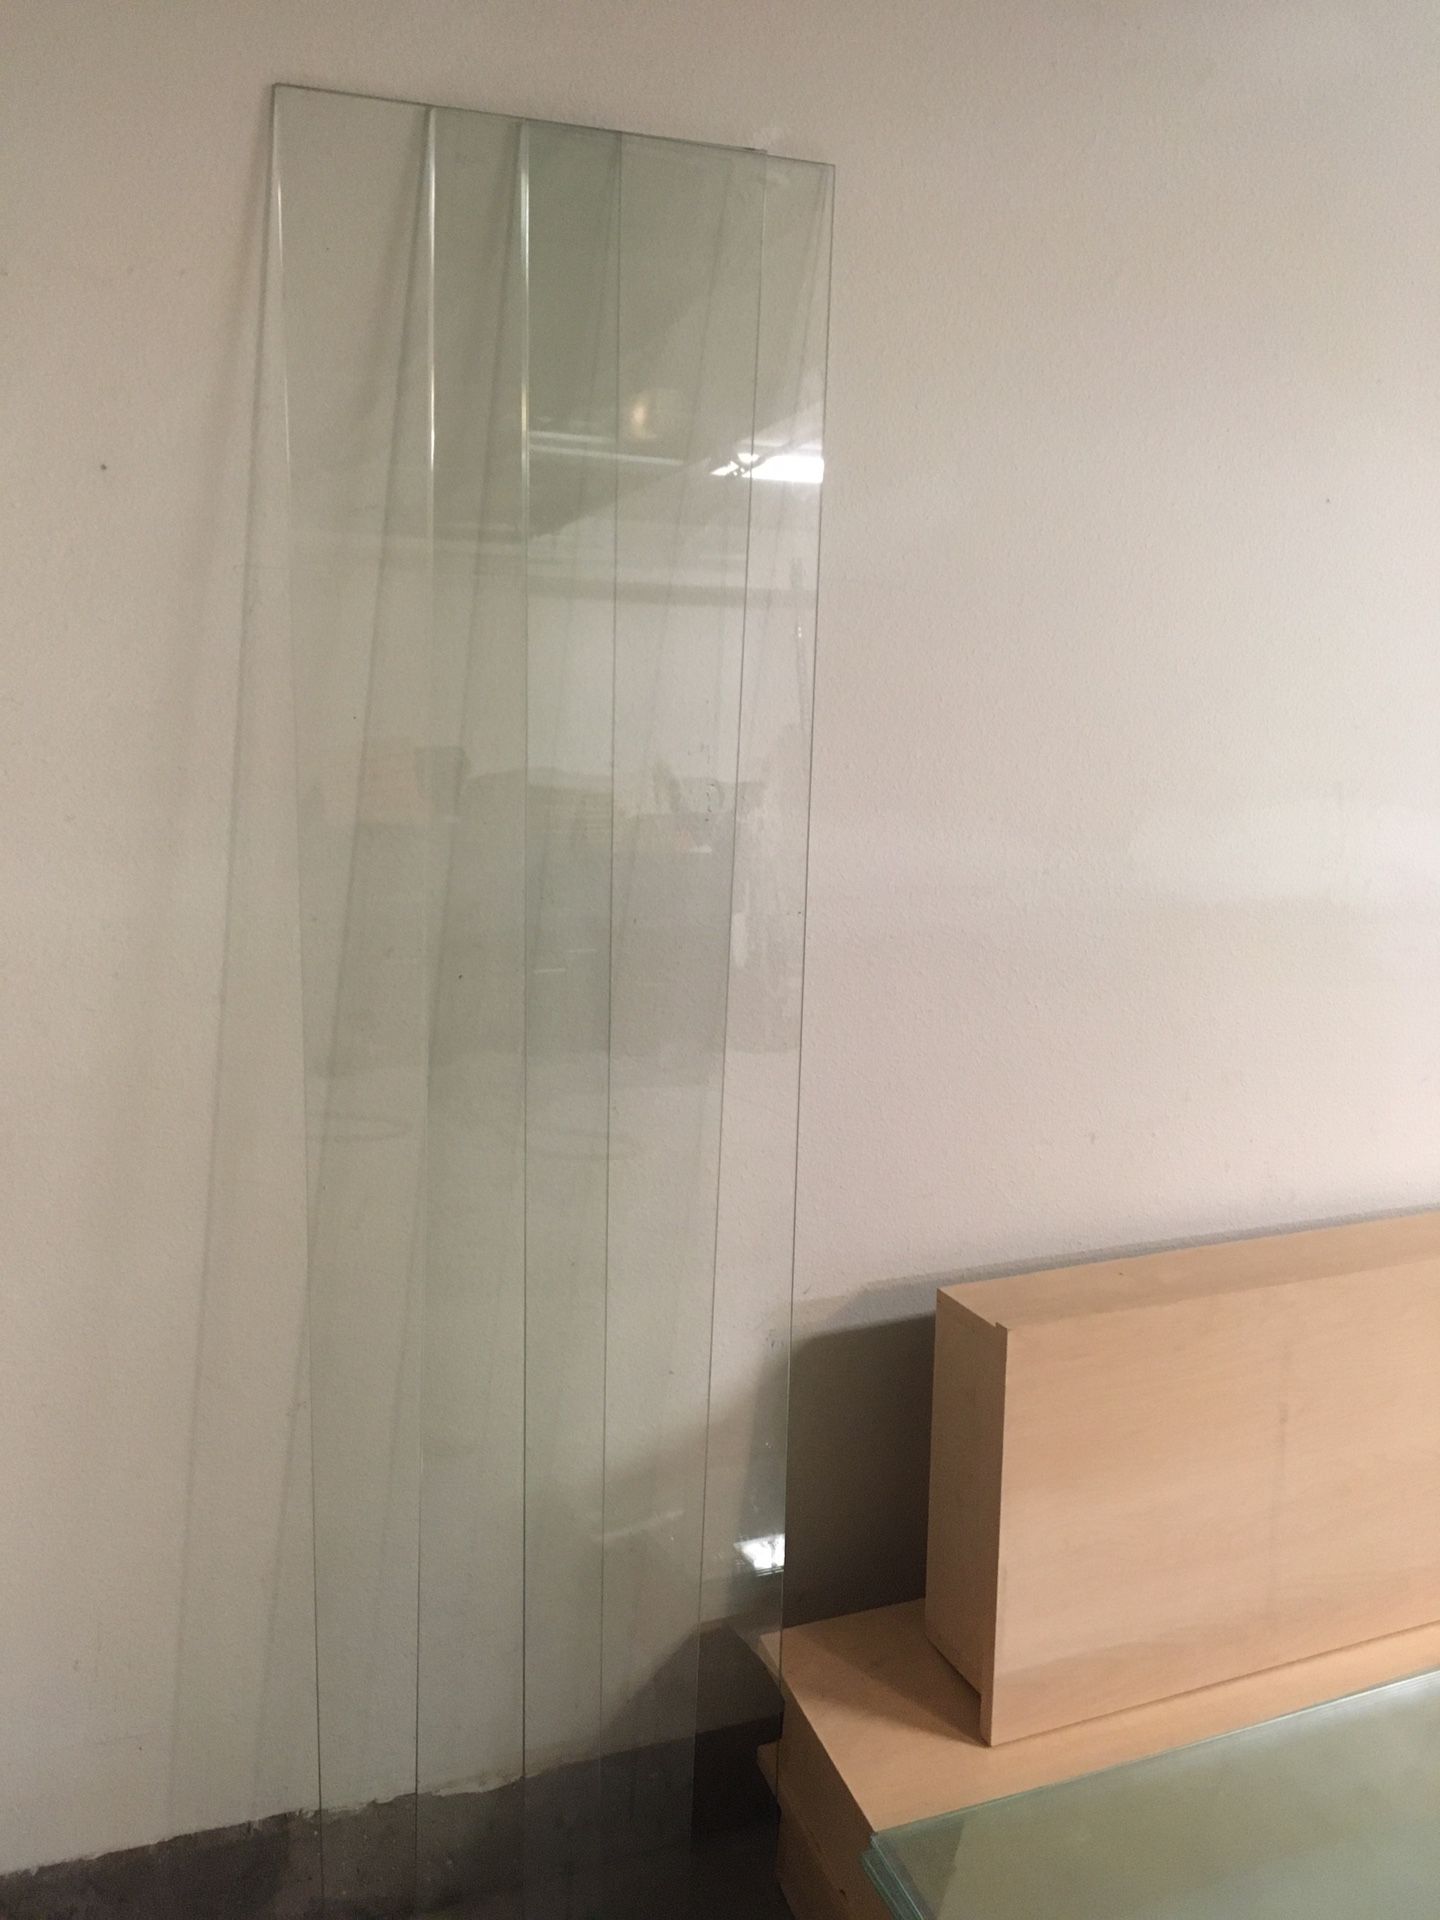 2 Glass shelves for display